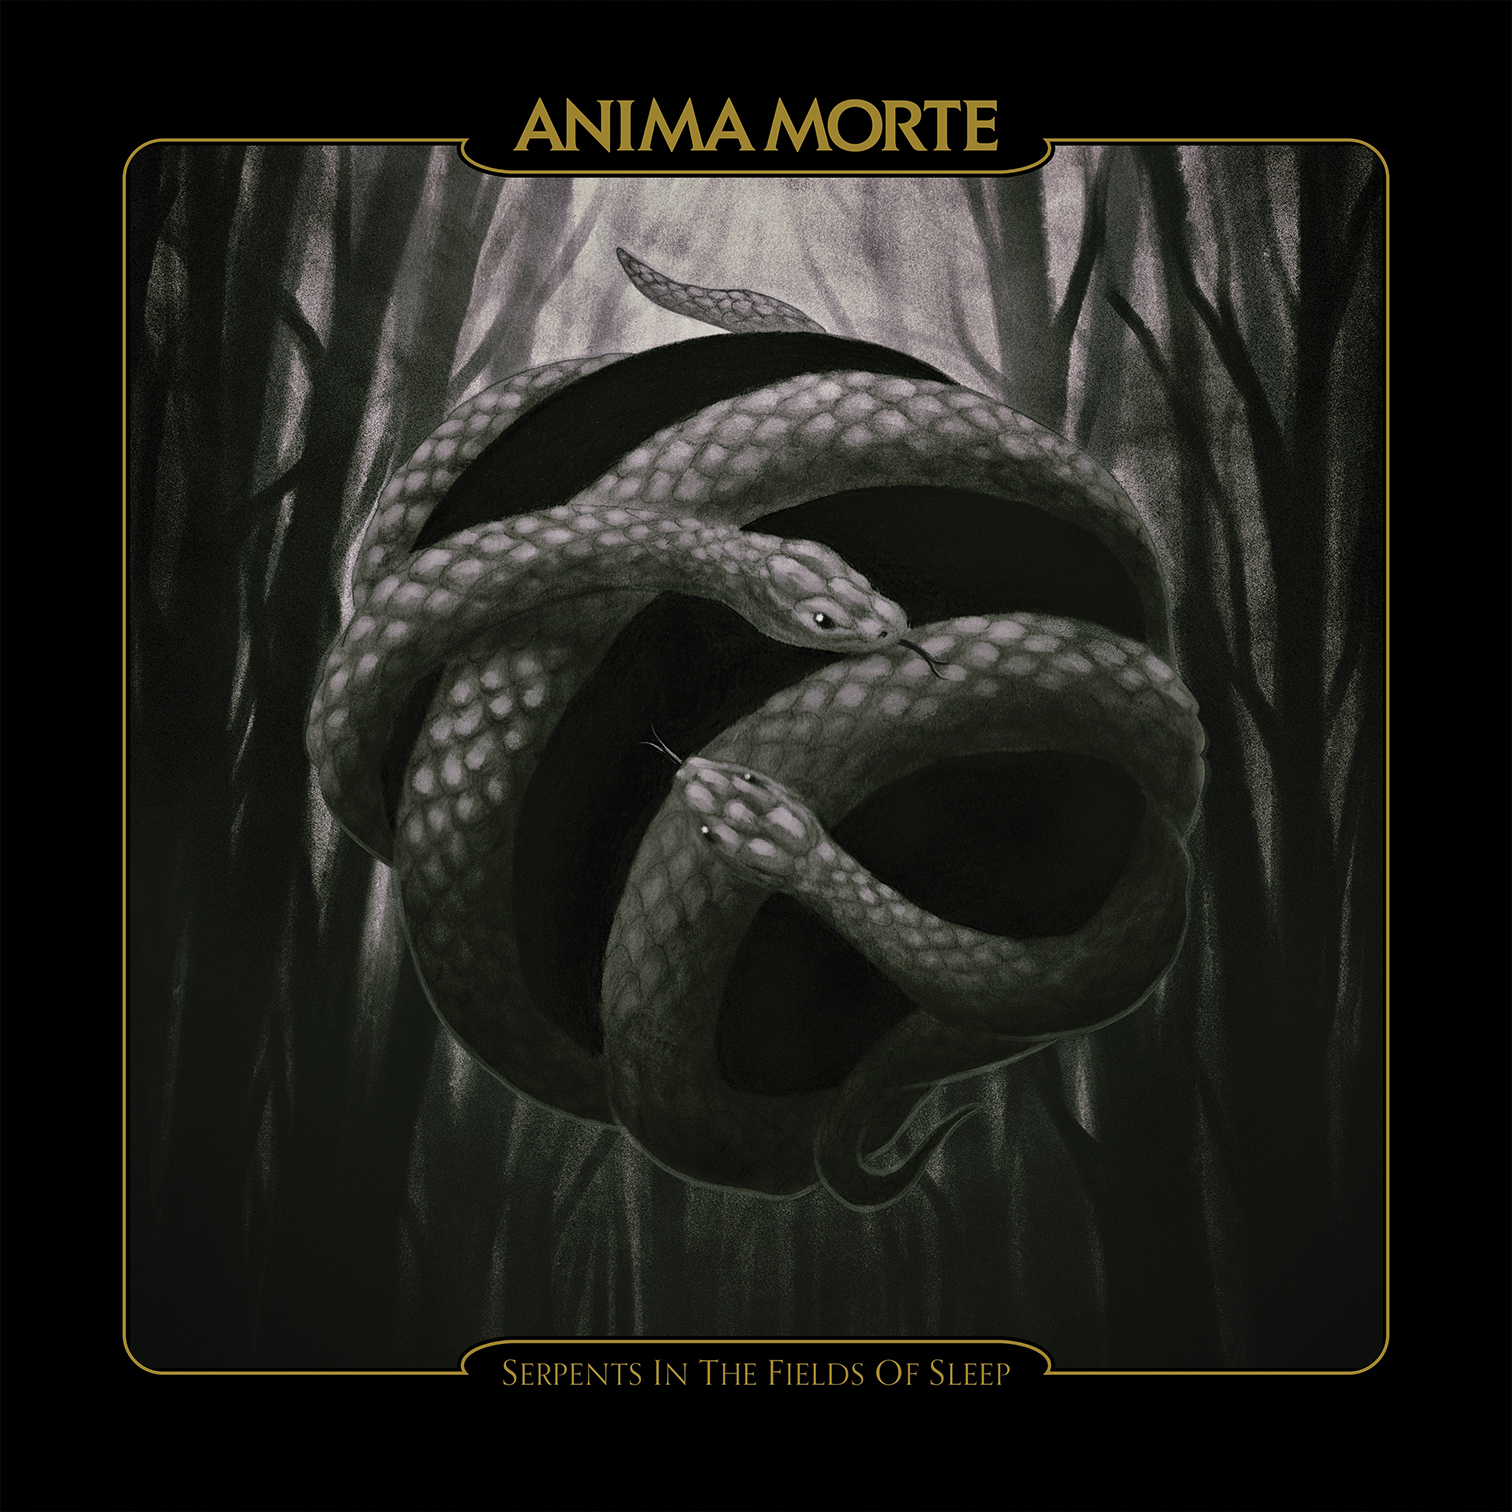 Track Premiere: Anima Morte – “Seeds of Trepidation”